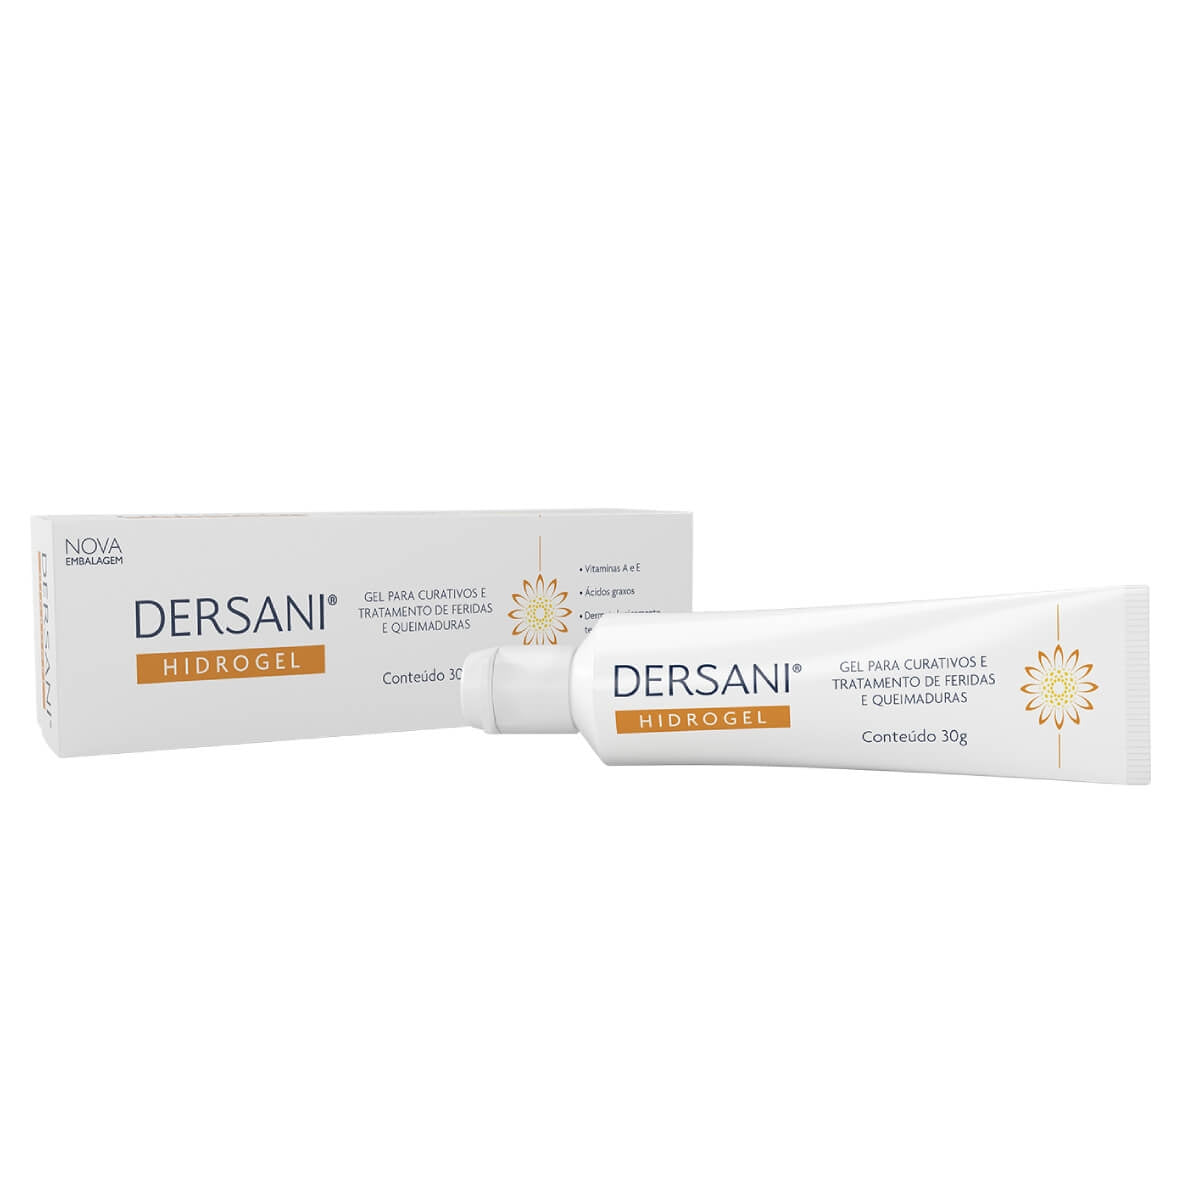 Dersani Hydrogel Healing and Bactecidal - 30g